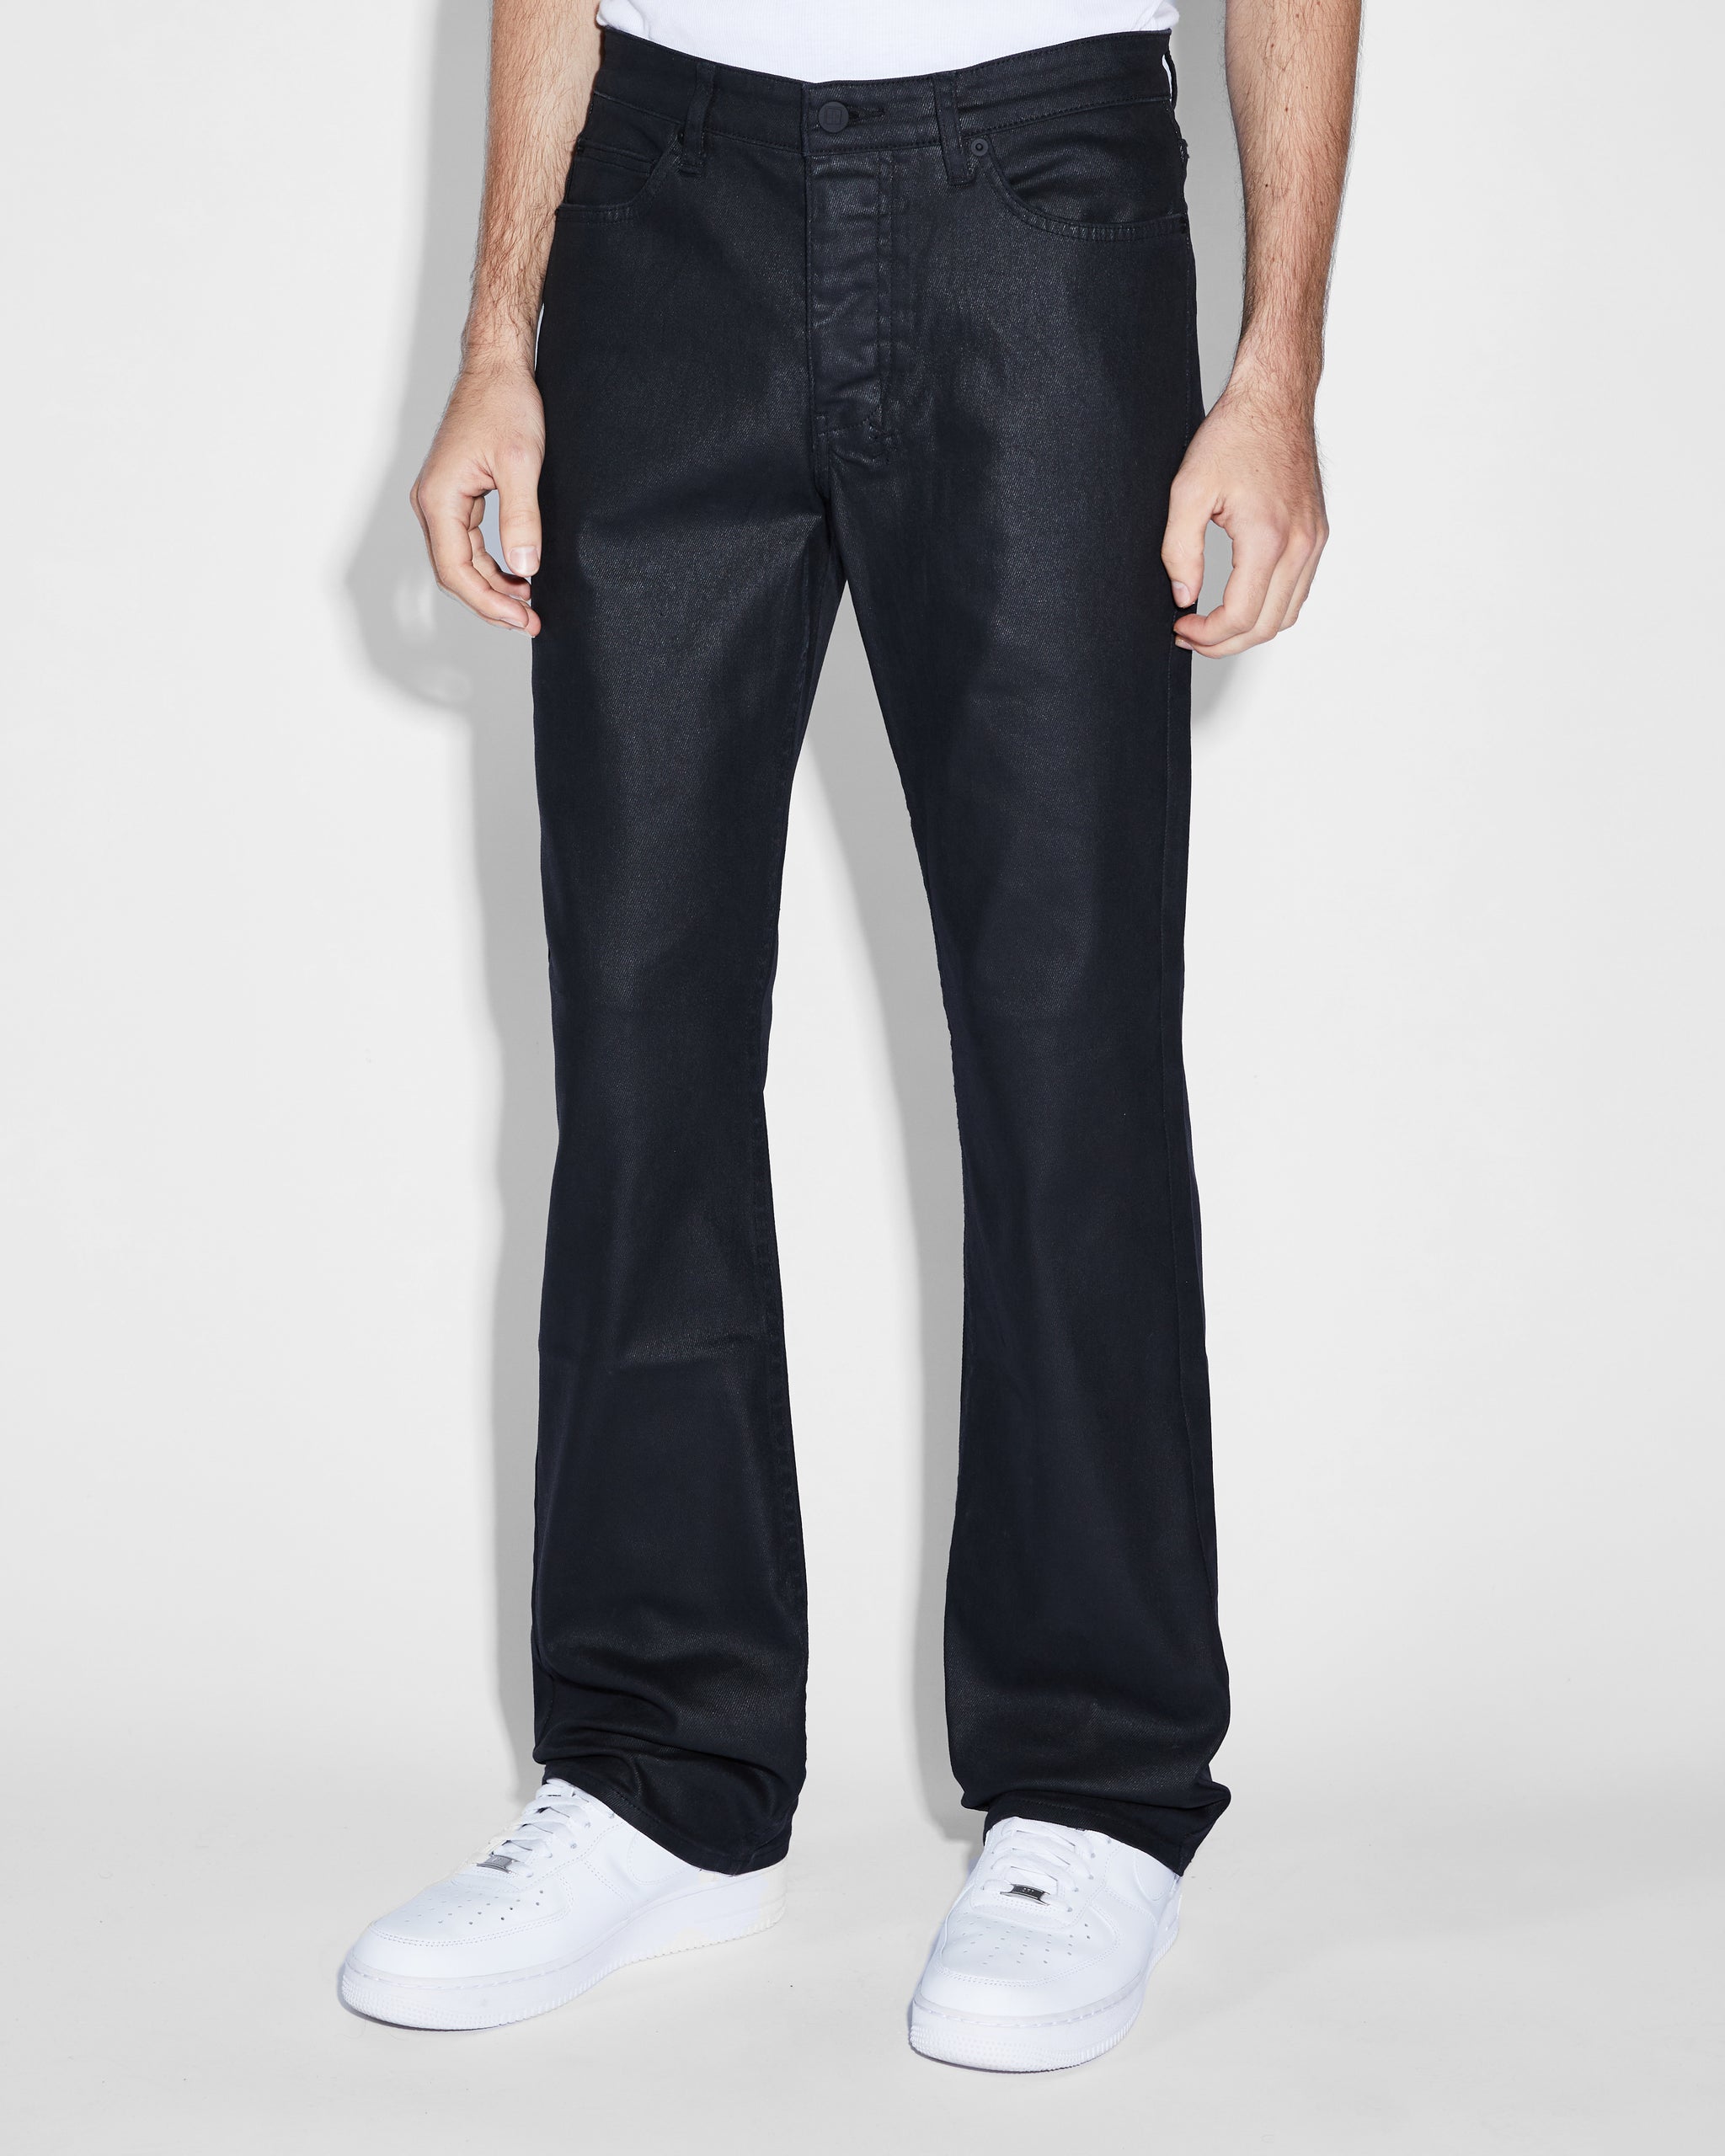 Black Waxed Denim Jeans | Garmentory